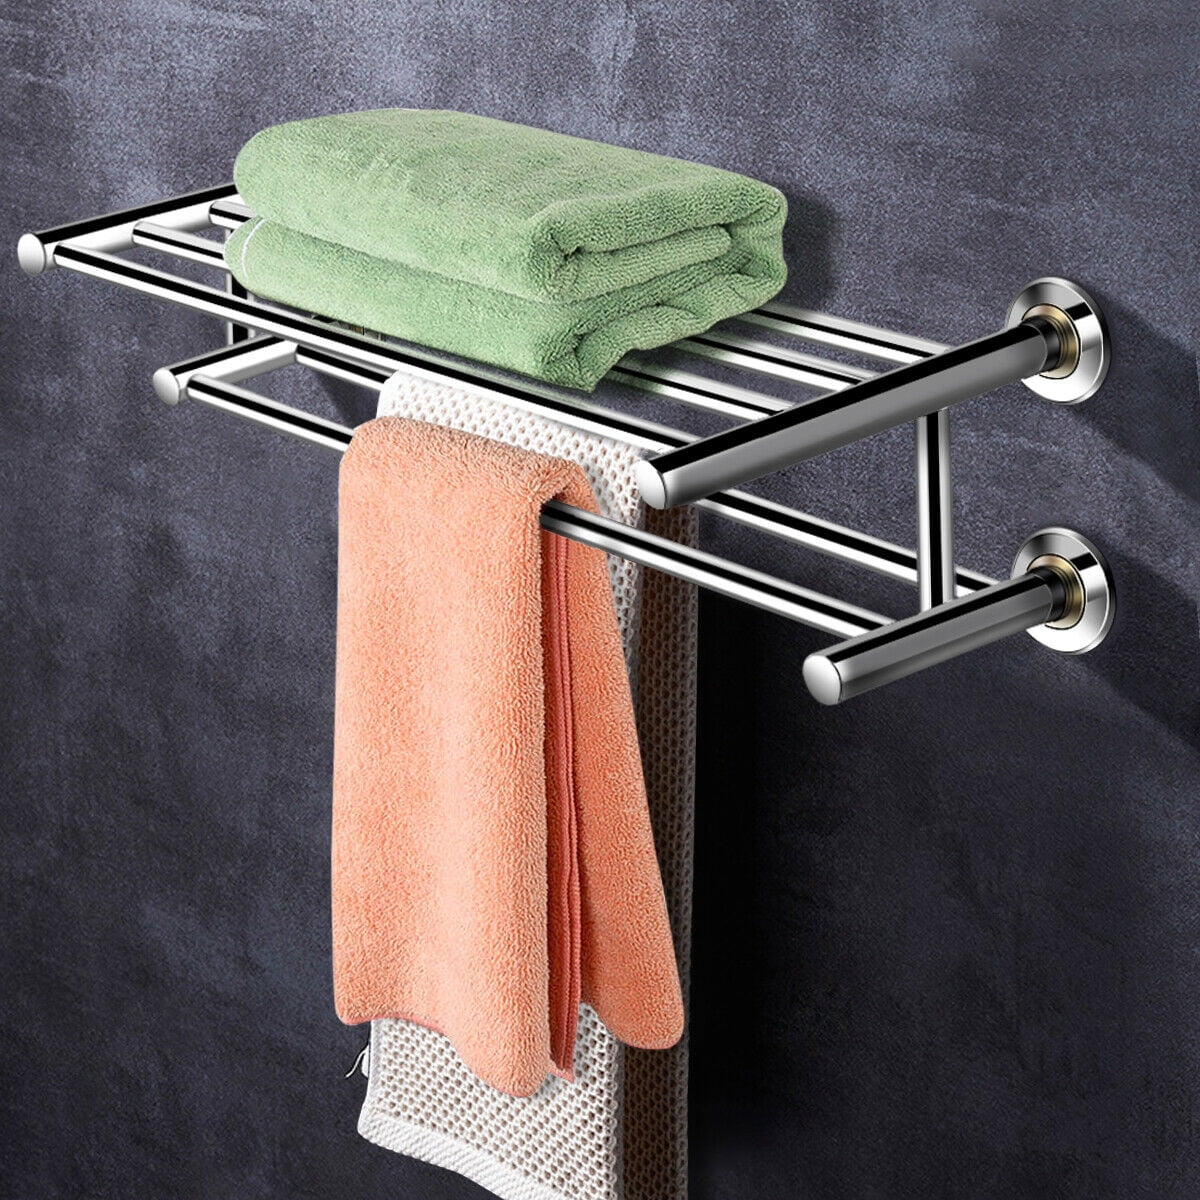 Stainless Steel Towel Rail Wall Wardrobe Towel Holder 5 Hooks Foldable nr:a138 